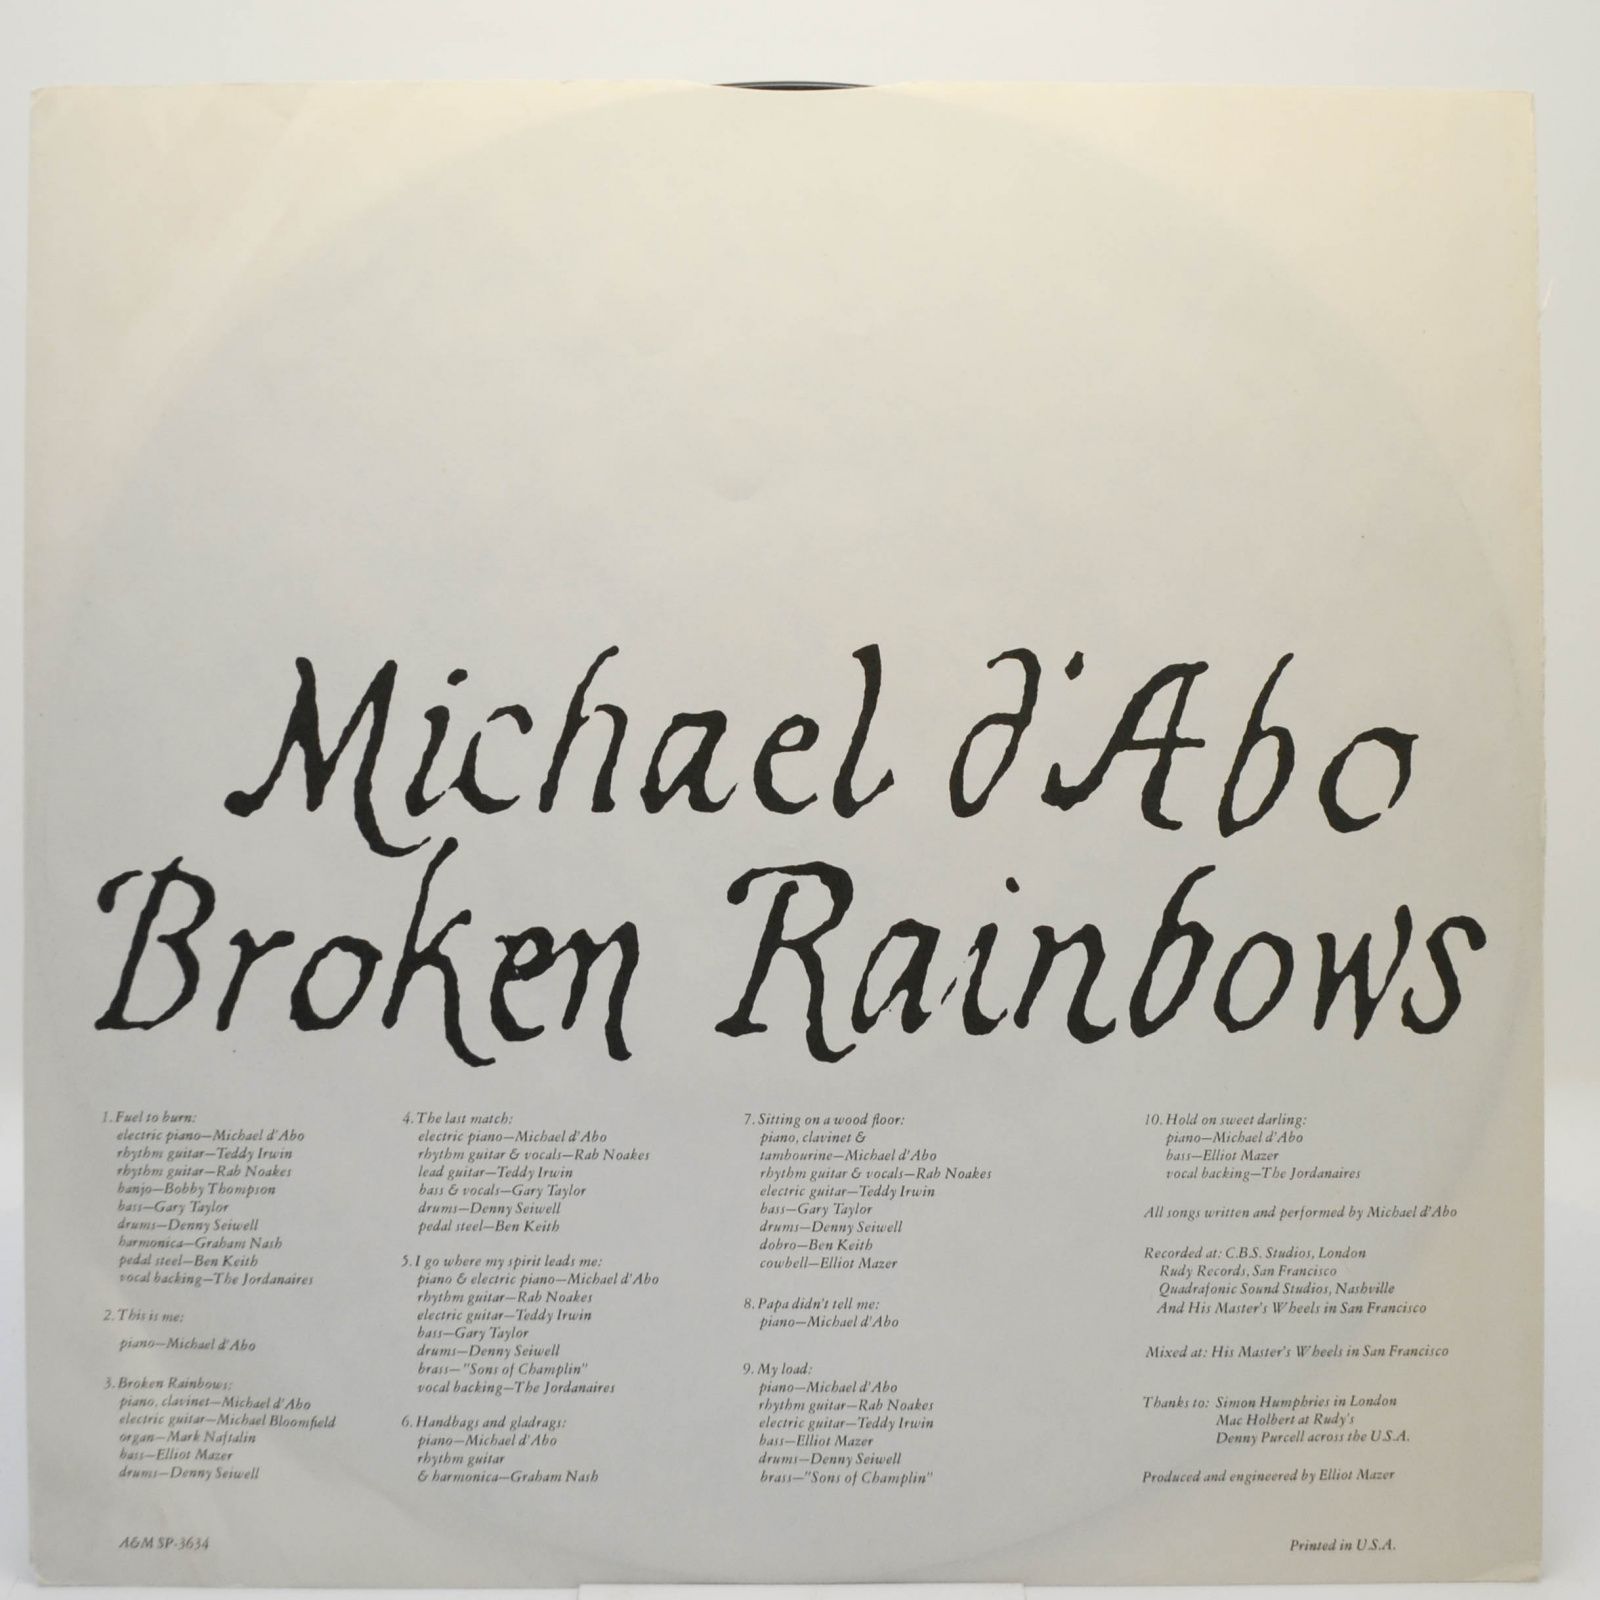 Michael D'Abo — Broken Rainbows, 1974